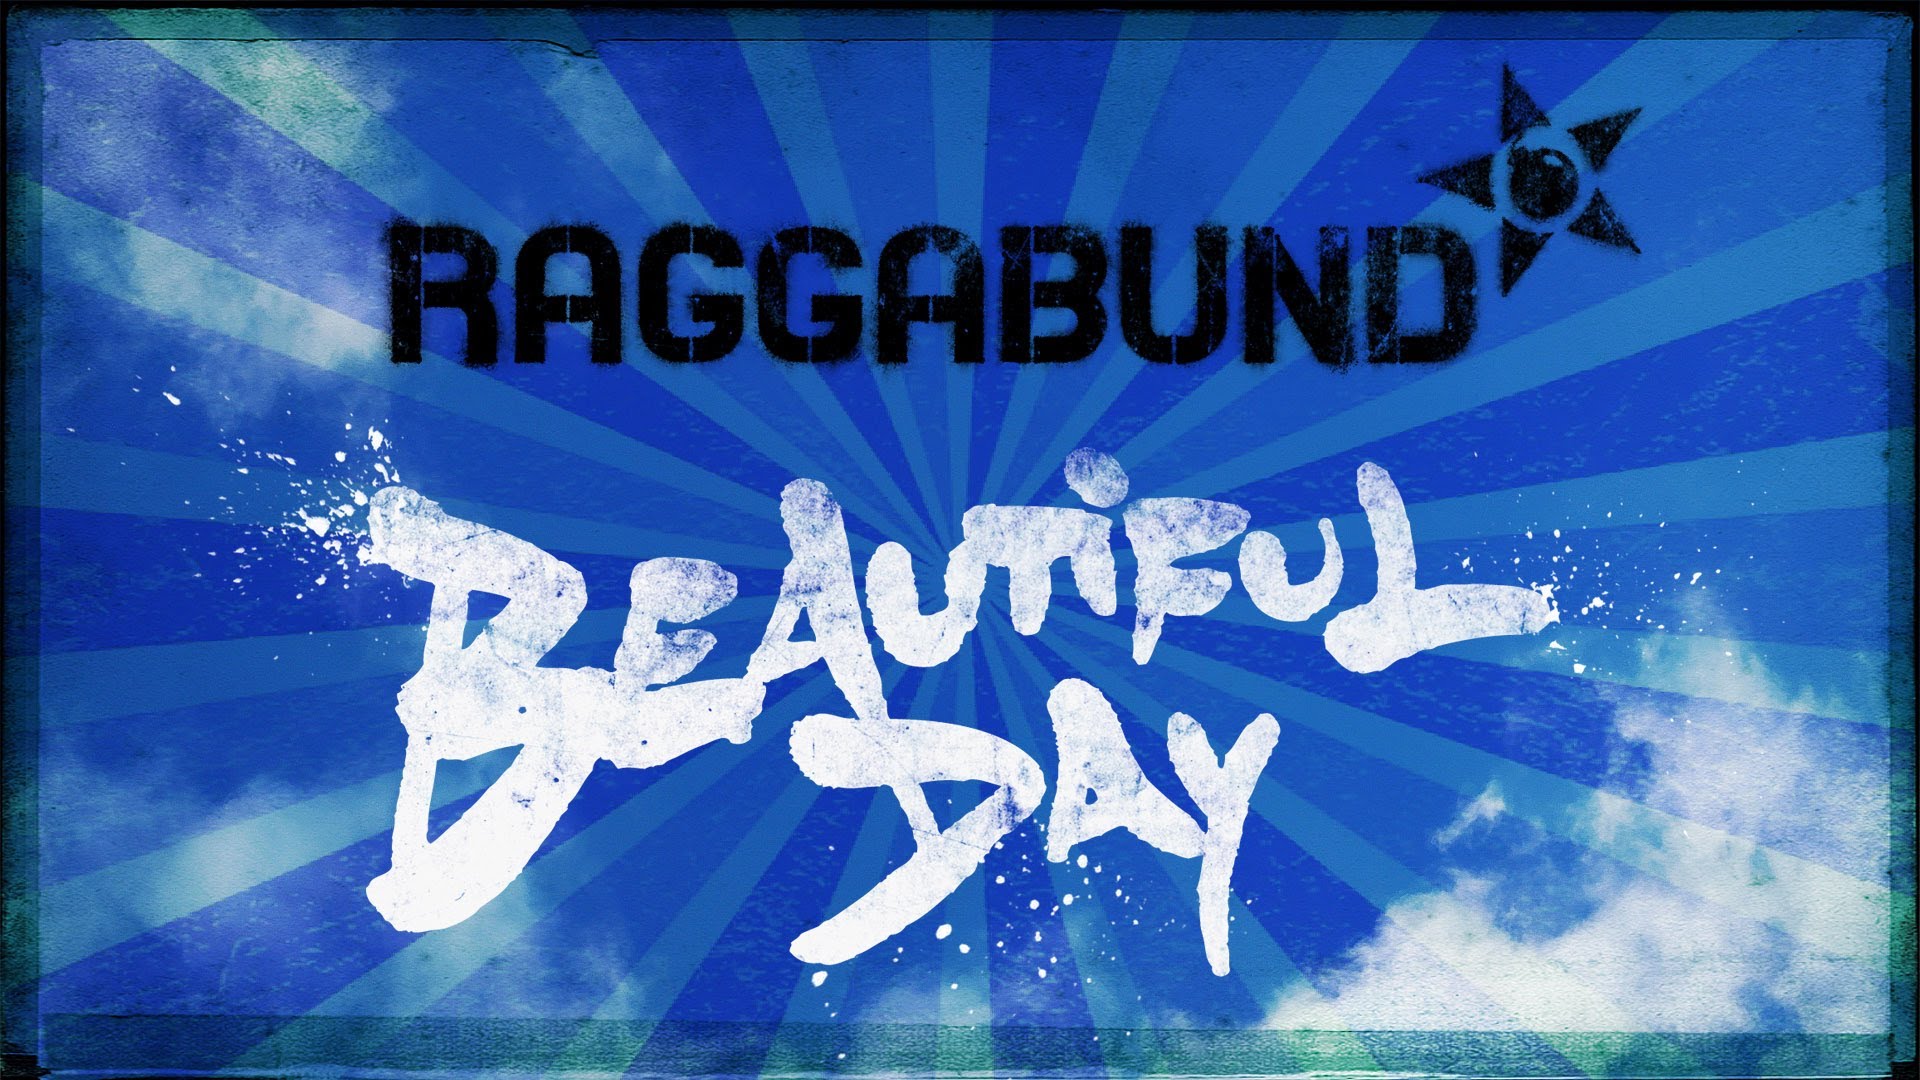 Raggabund - Beautiful Day [5/20/2014]